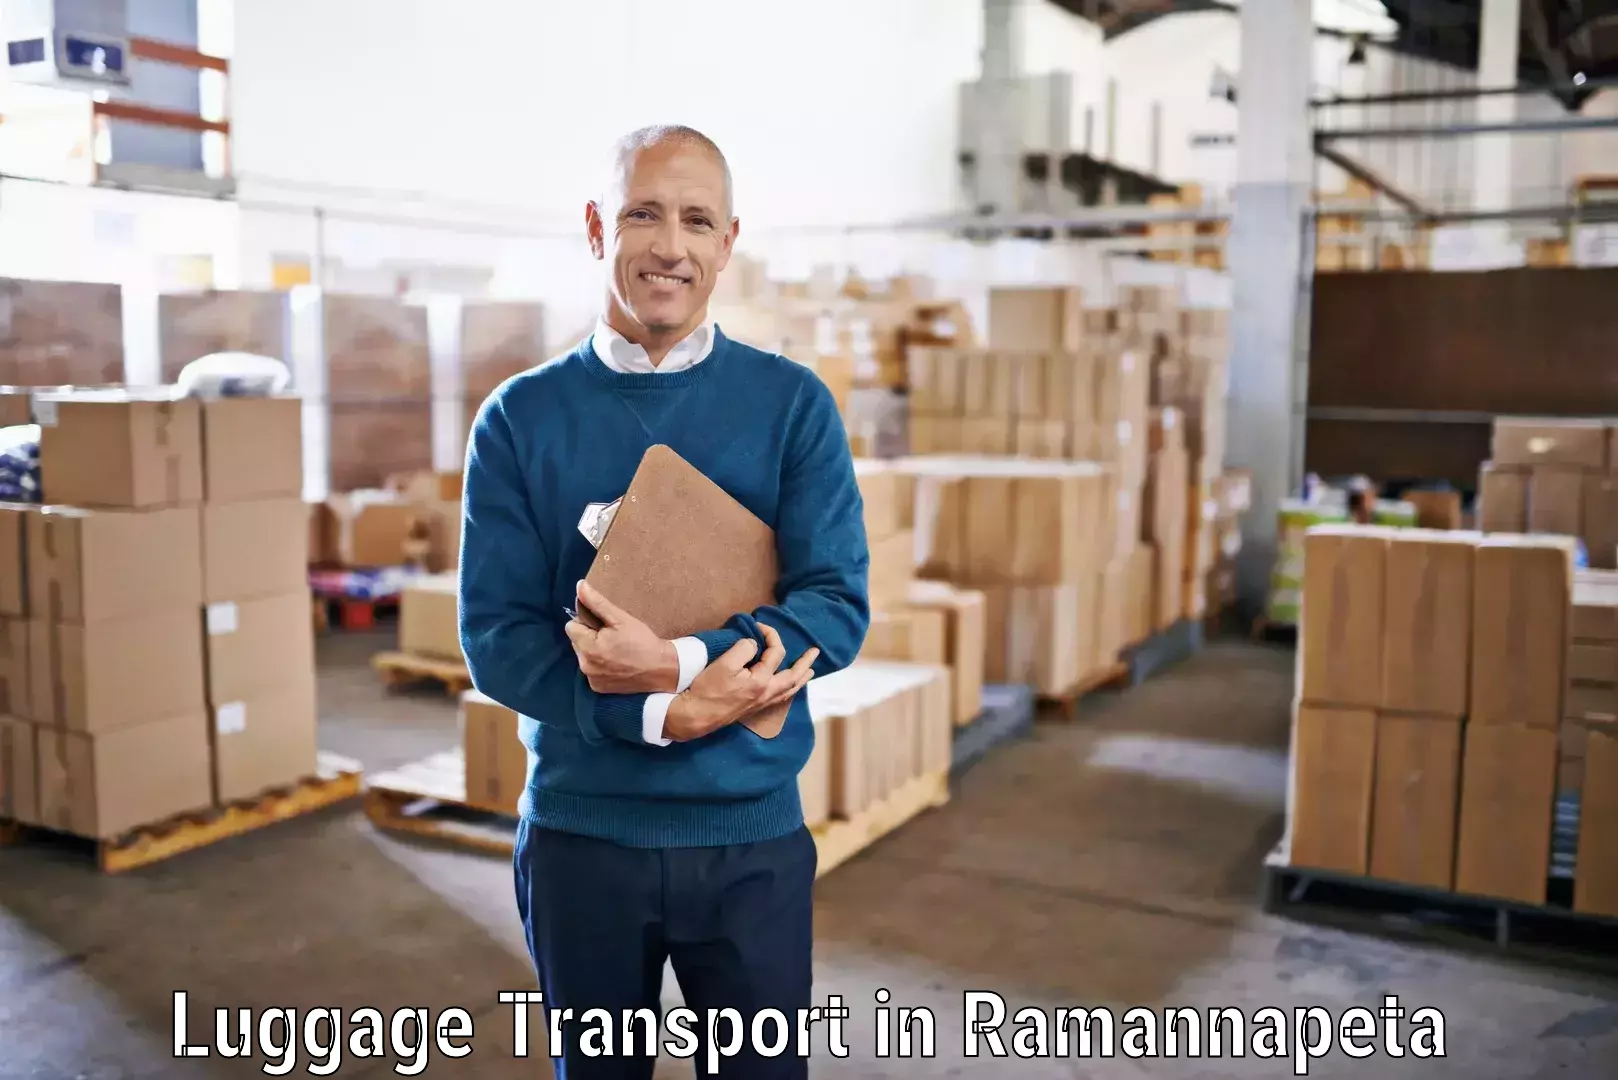 Nationwide luggage transport in Ramannapeta